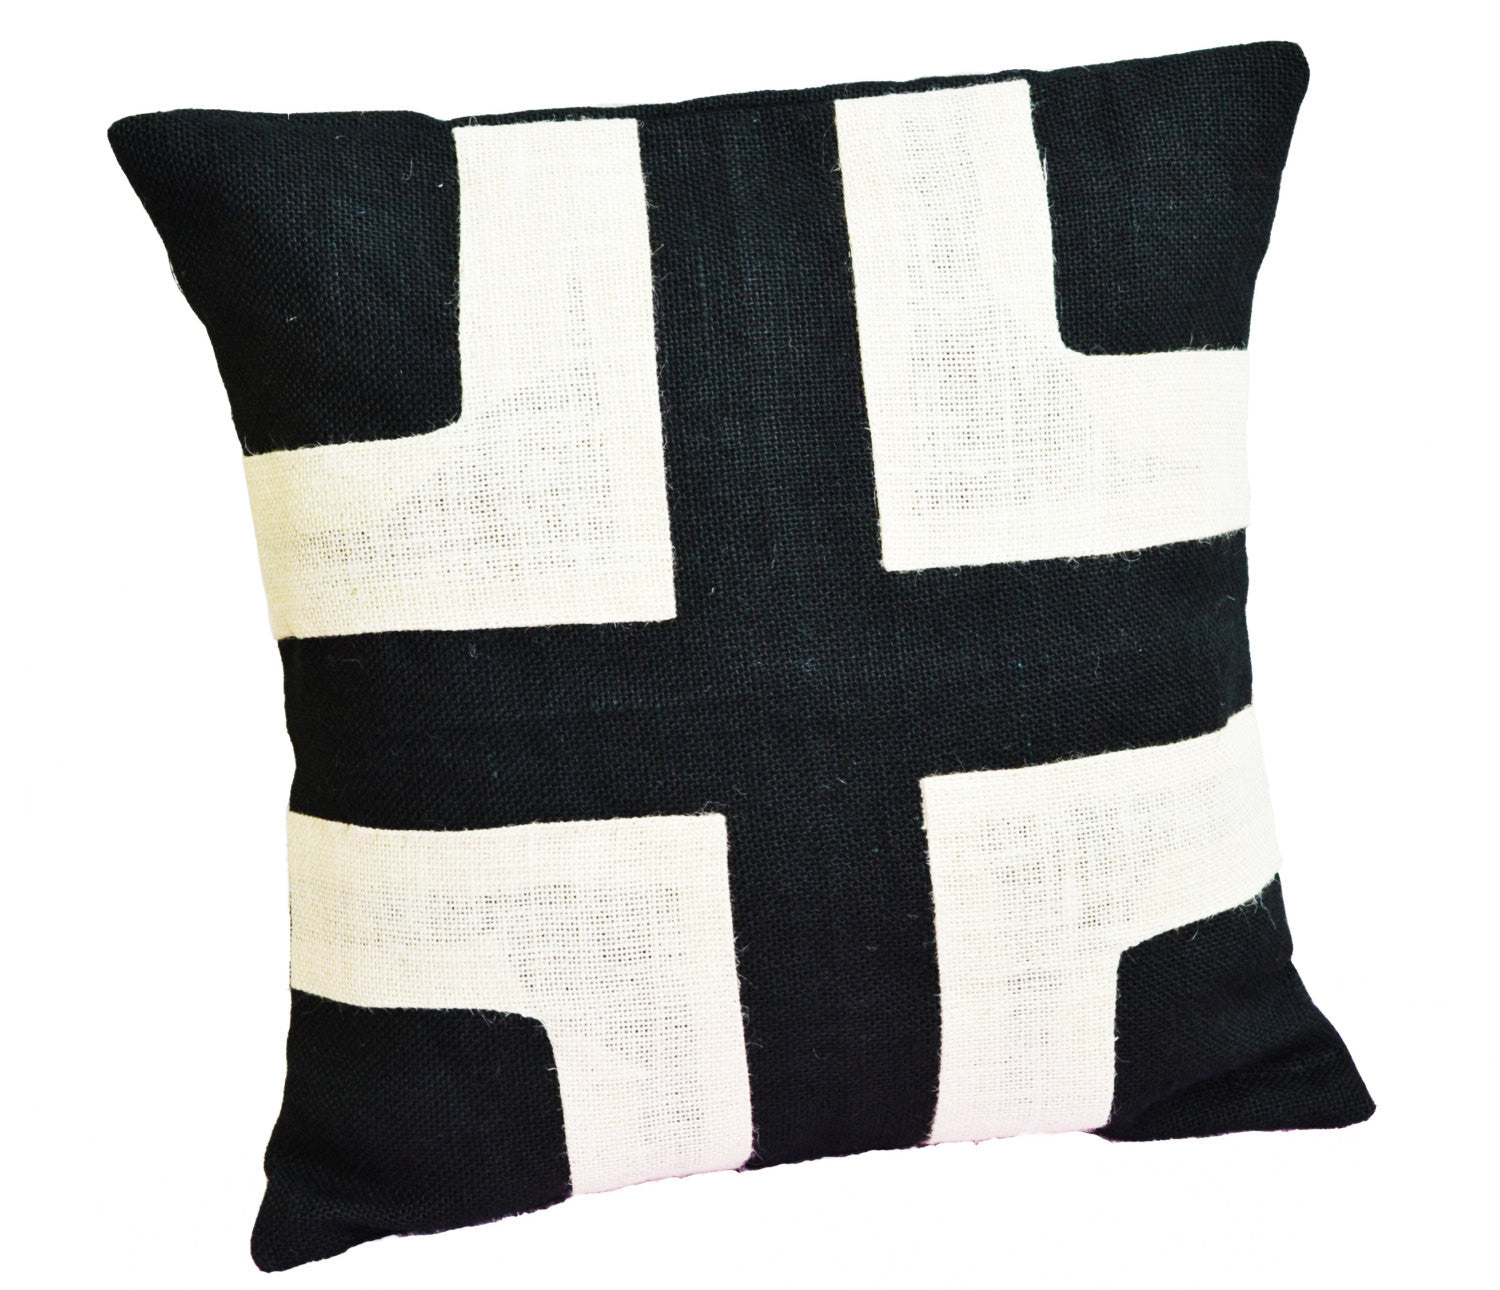 Amore Beaute Throw pillow in black burlap with bold cream burlap applique pattern.